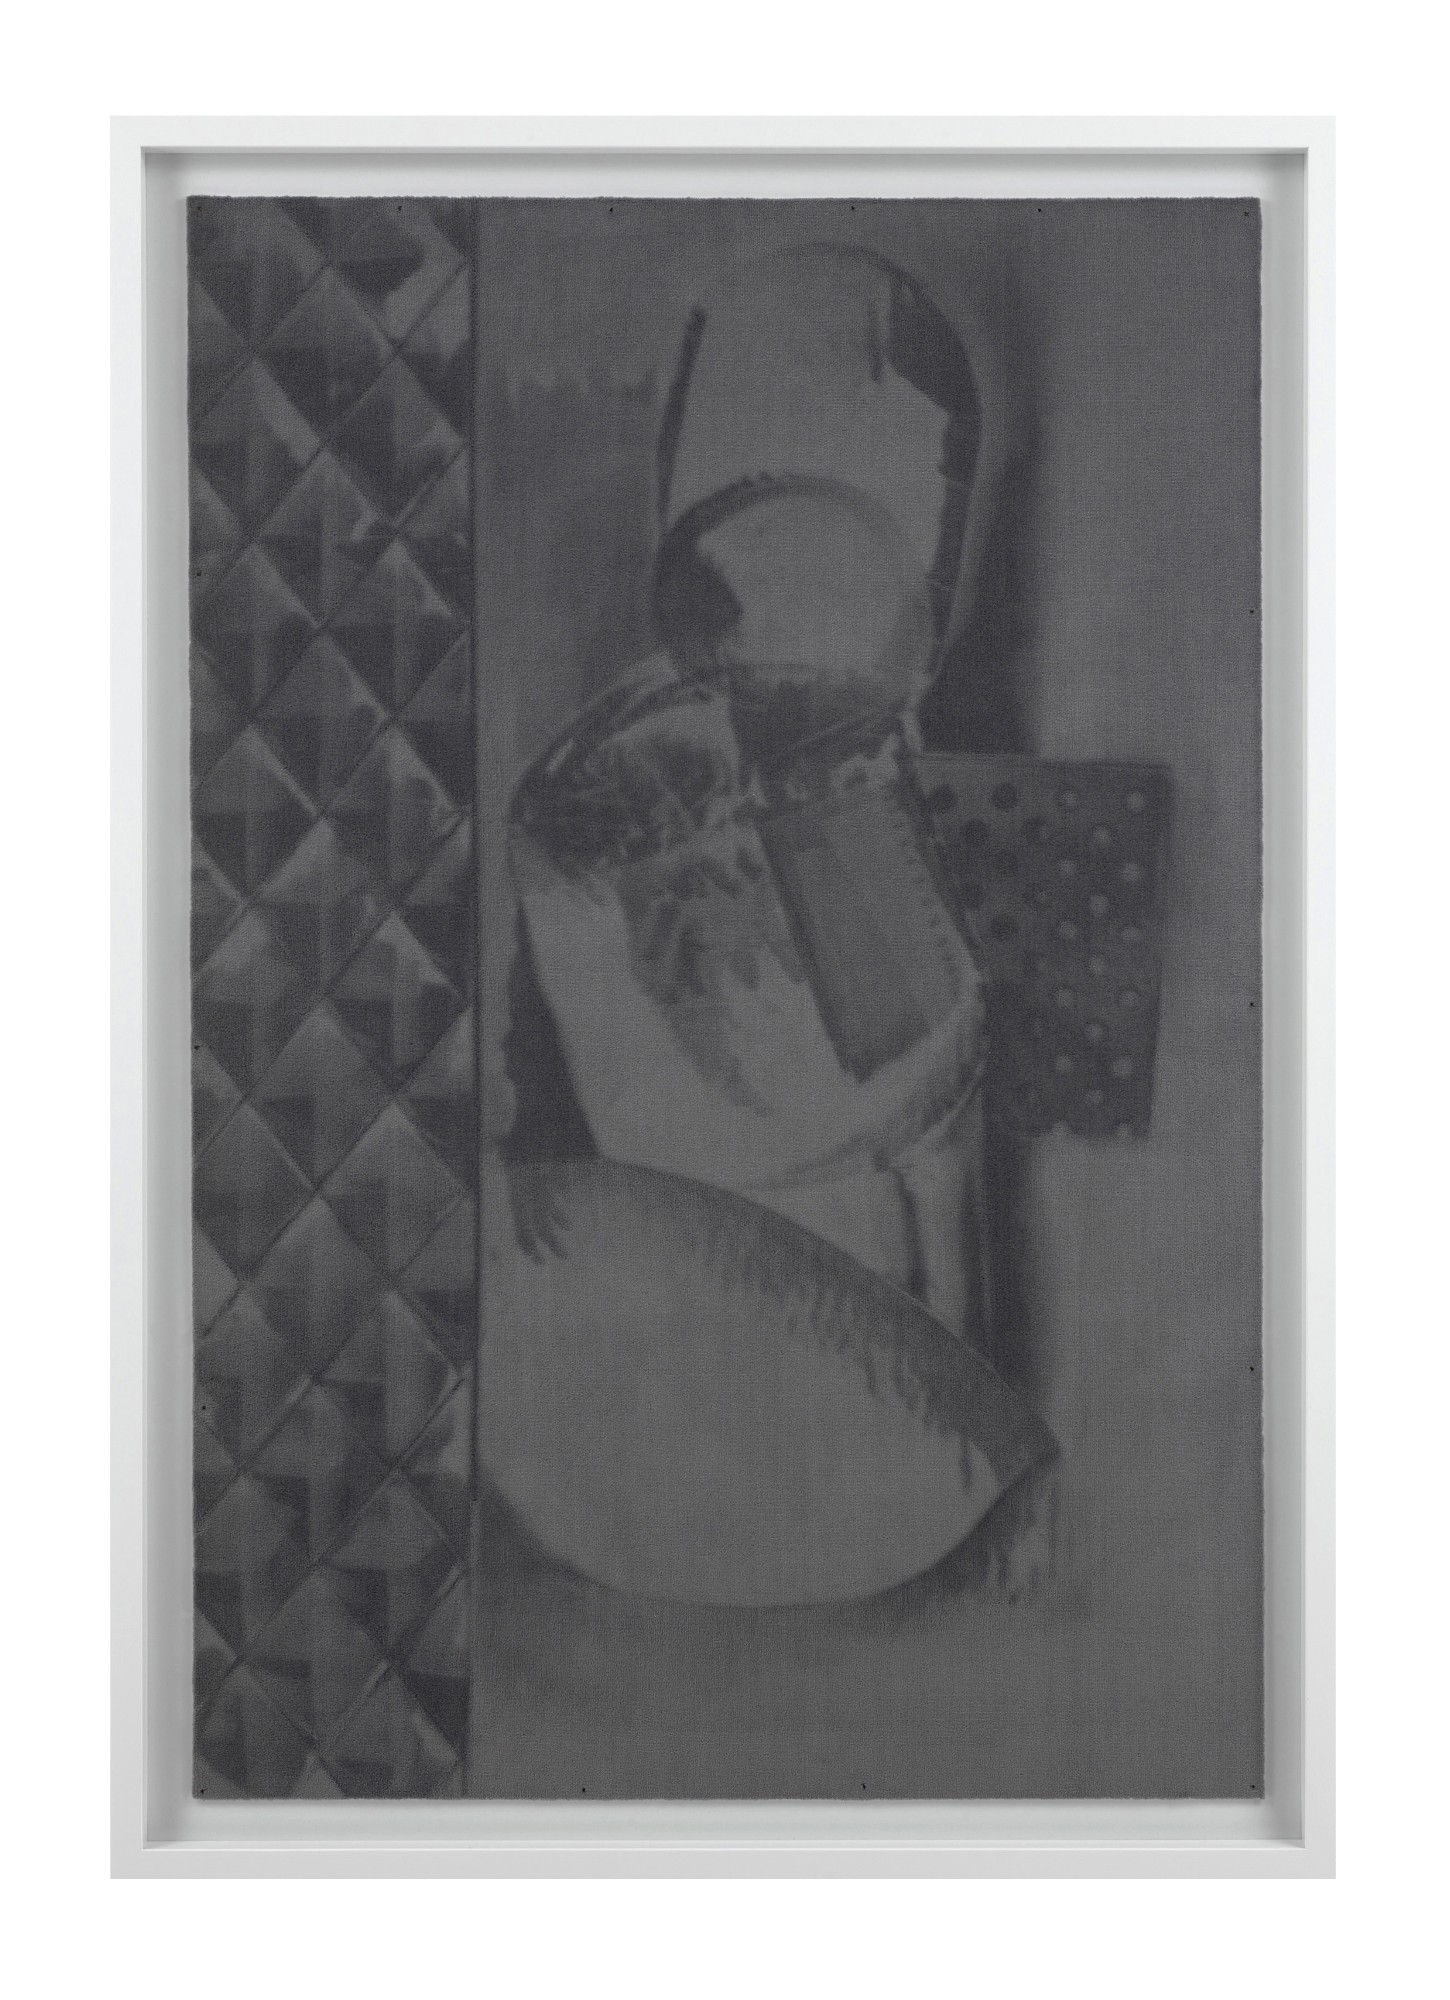 Tobias Hantmann, untitled, 2009, velour carpet, painted wooden frame, glass, 150 x 100 cm